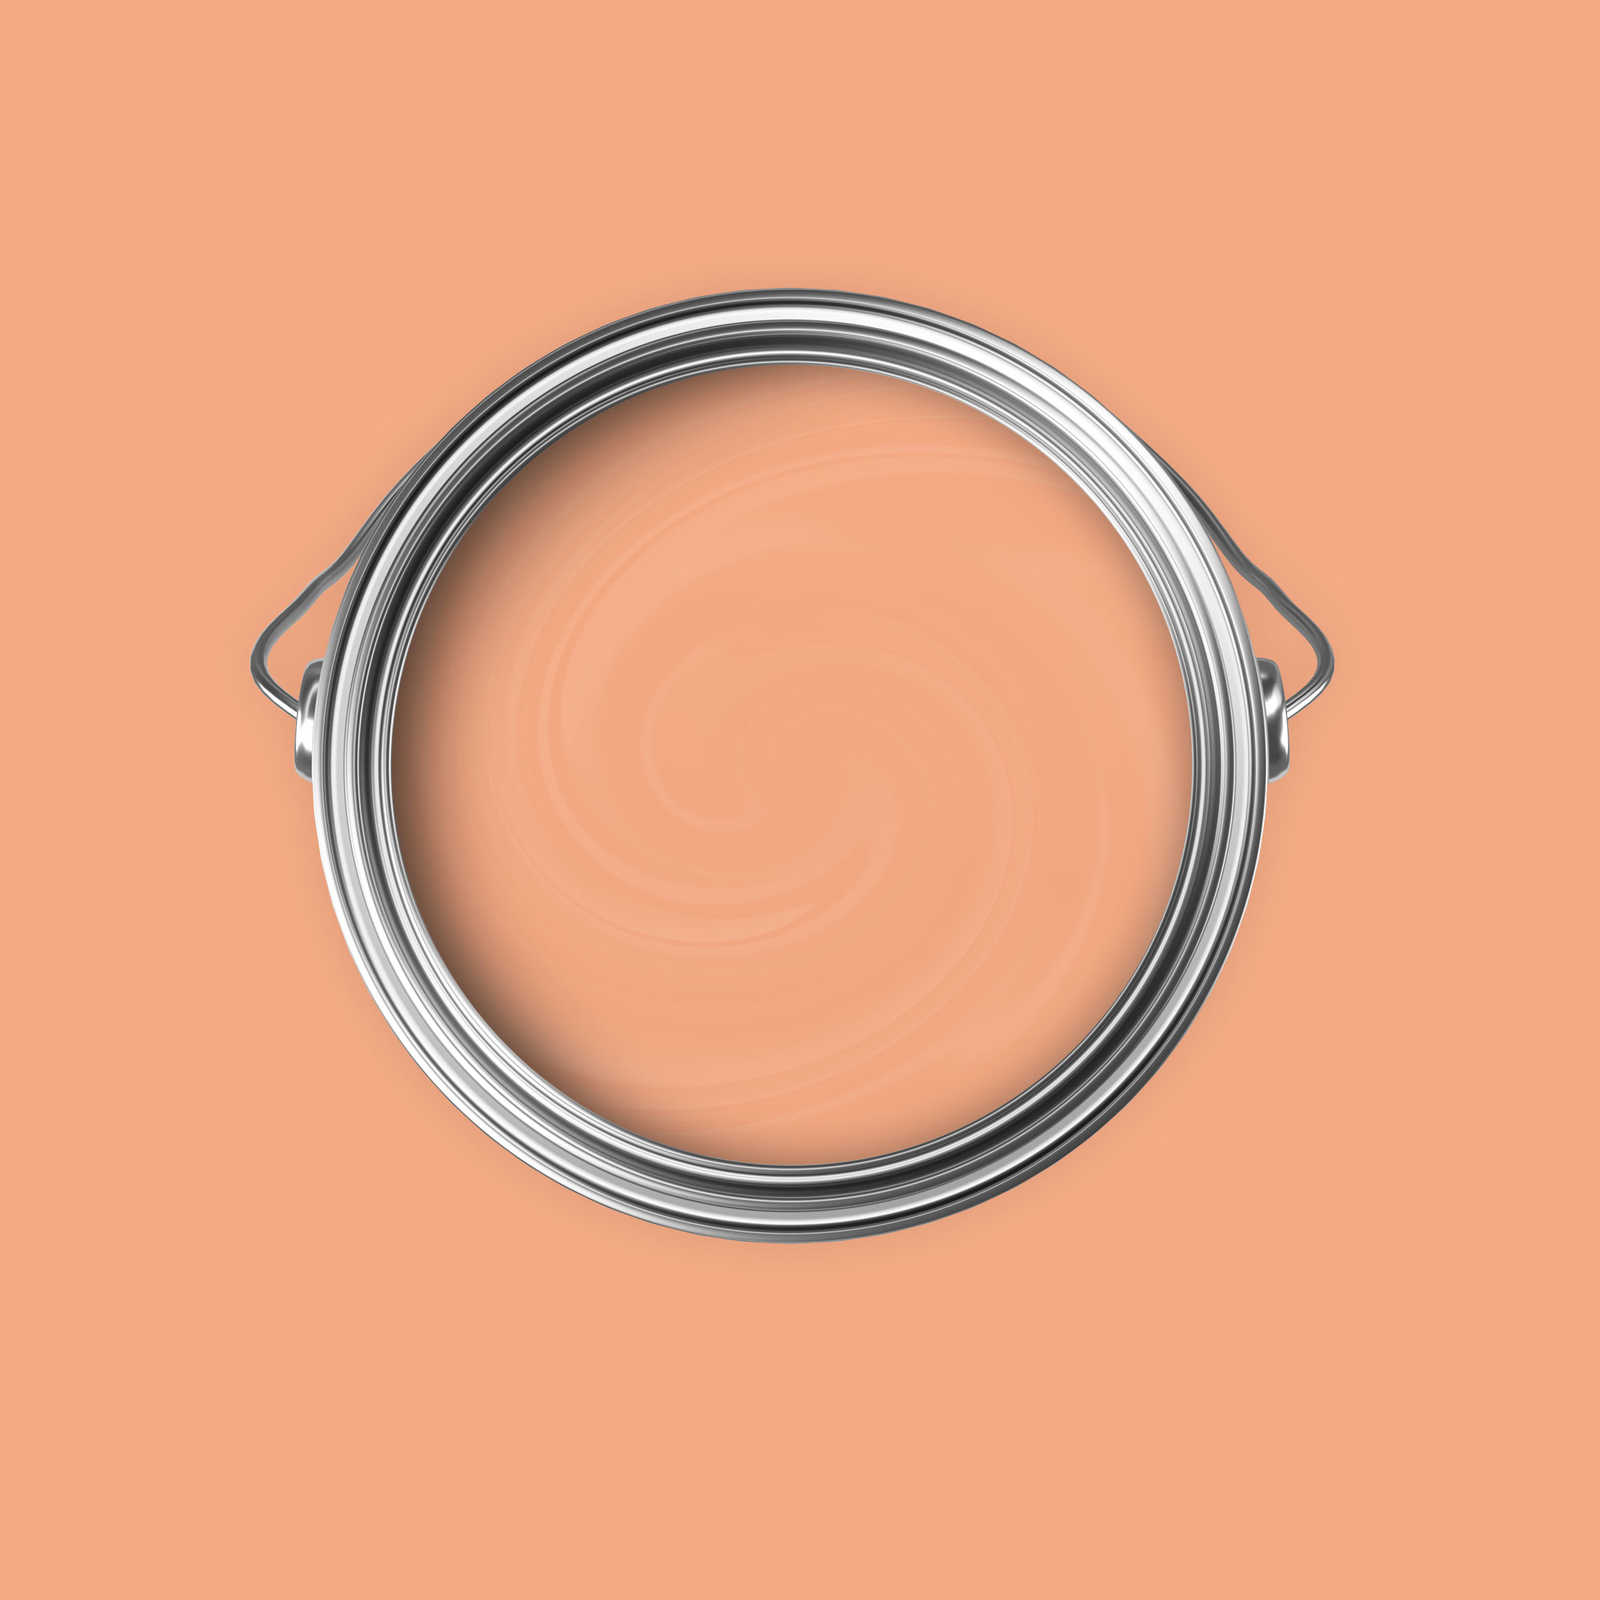             Pittura murale Premium Friendly Salmon »Active Apricot« NW913 – 5 litri
        